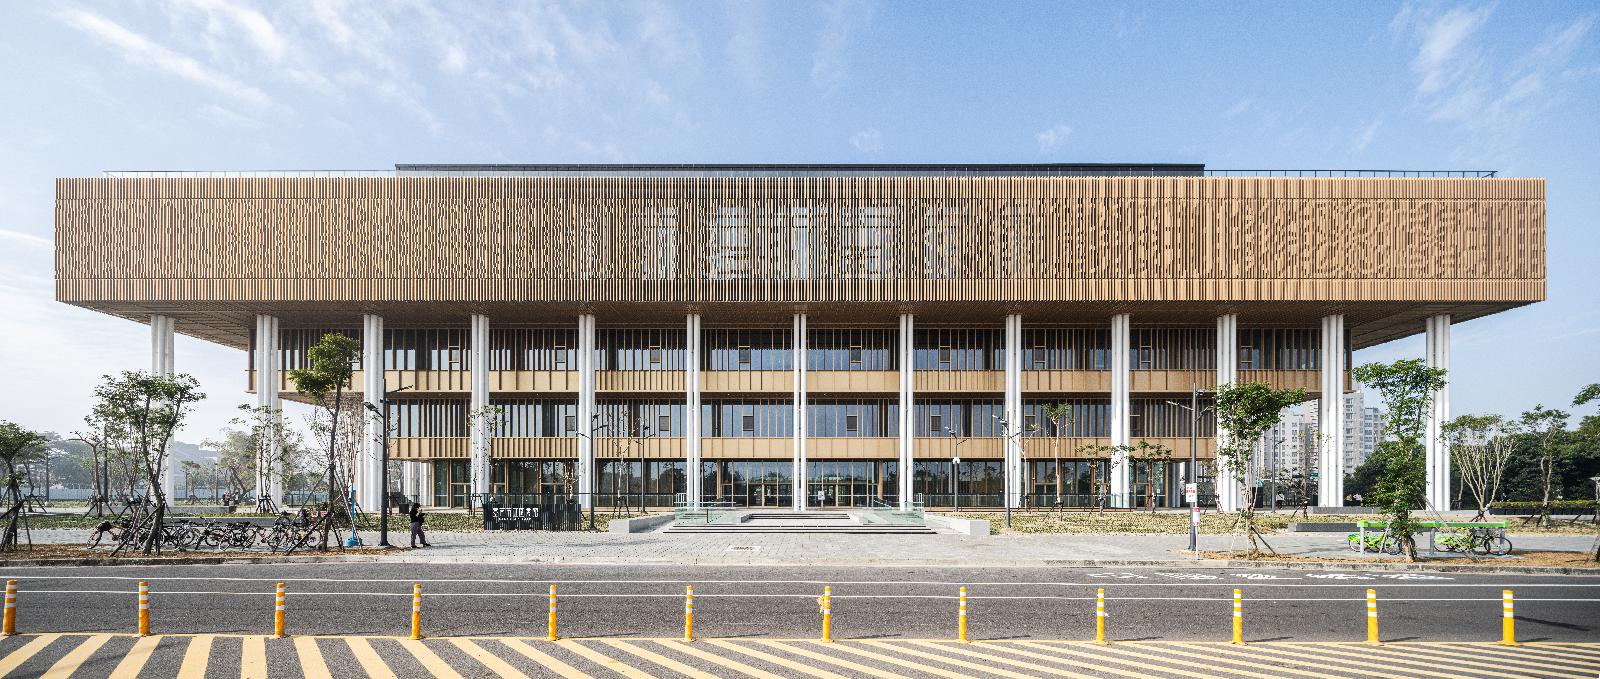 Tainan Public Library